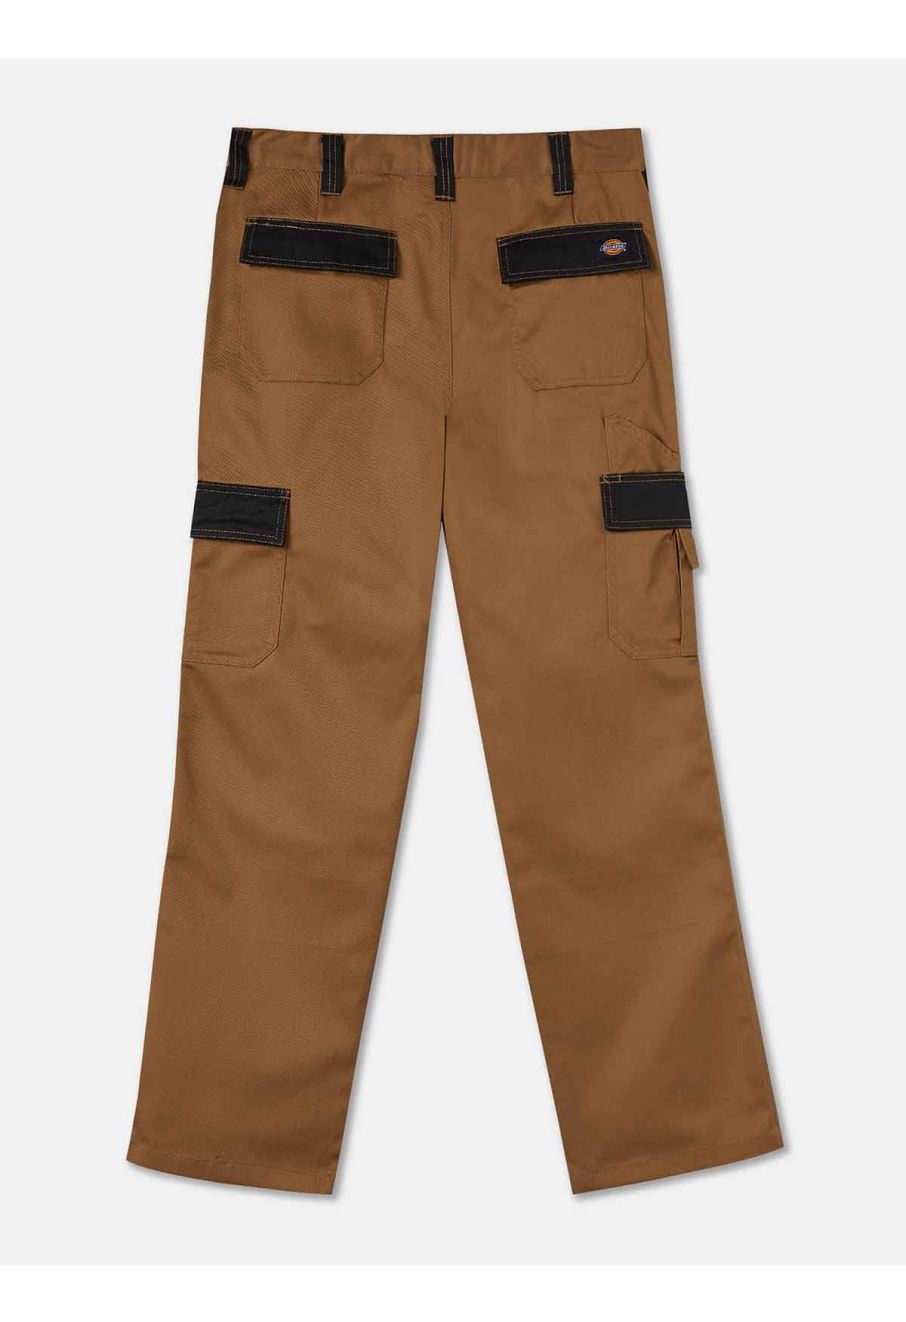 Hfyihgf Men's Multi Pockets Slim Cargo Pants Hiking Combat Wear-Resistant Work  Trousers Outdoor Casual Straight Fit Sweatpants(Gray,XXL) - Walmart.com